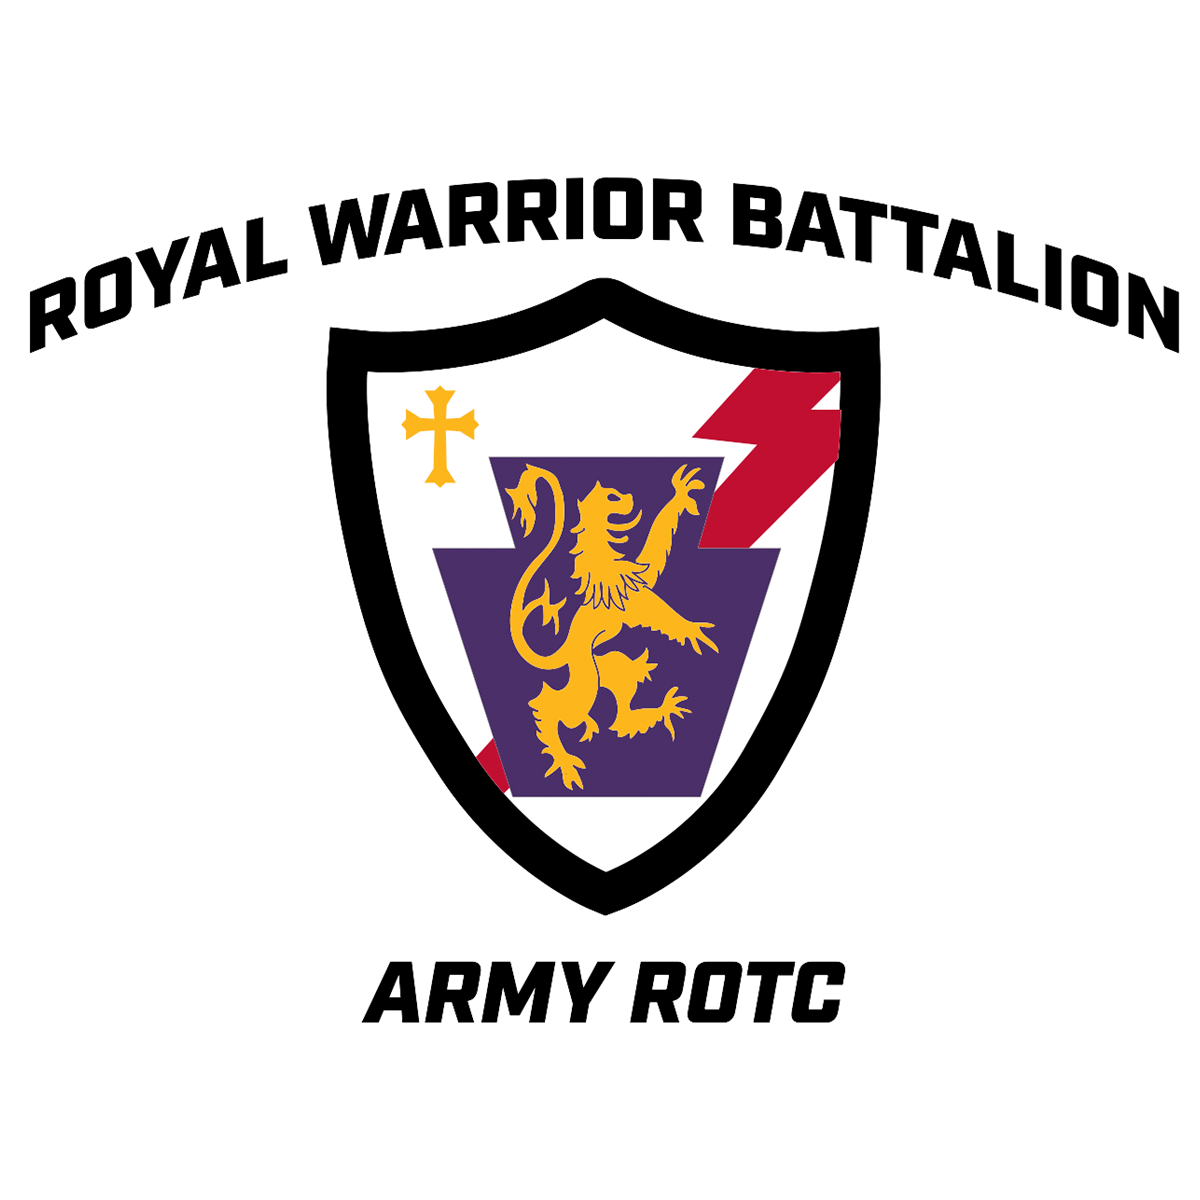 Royal Warrior Battalion Army ROTC Team Store